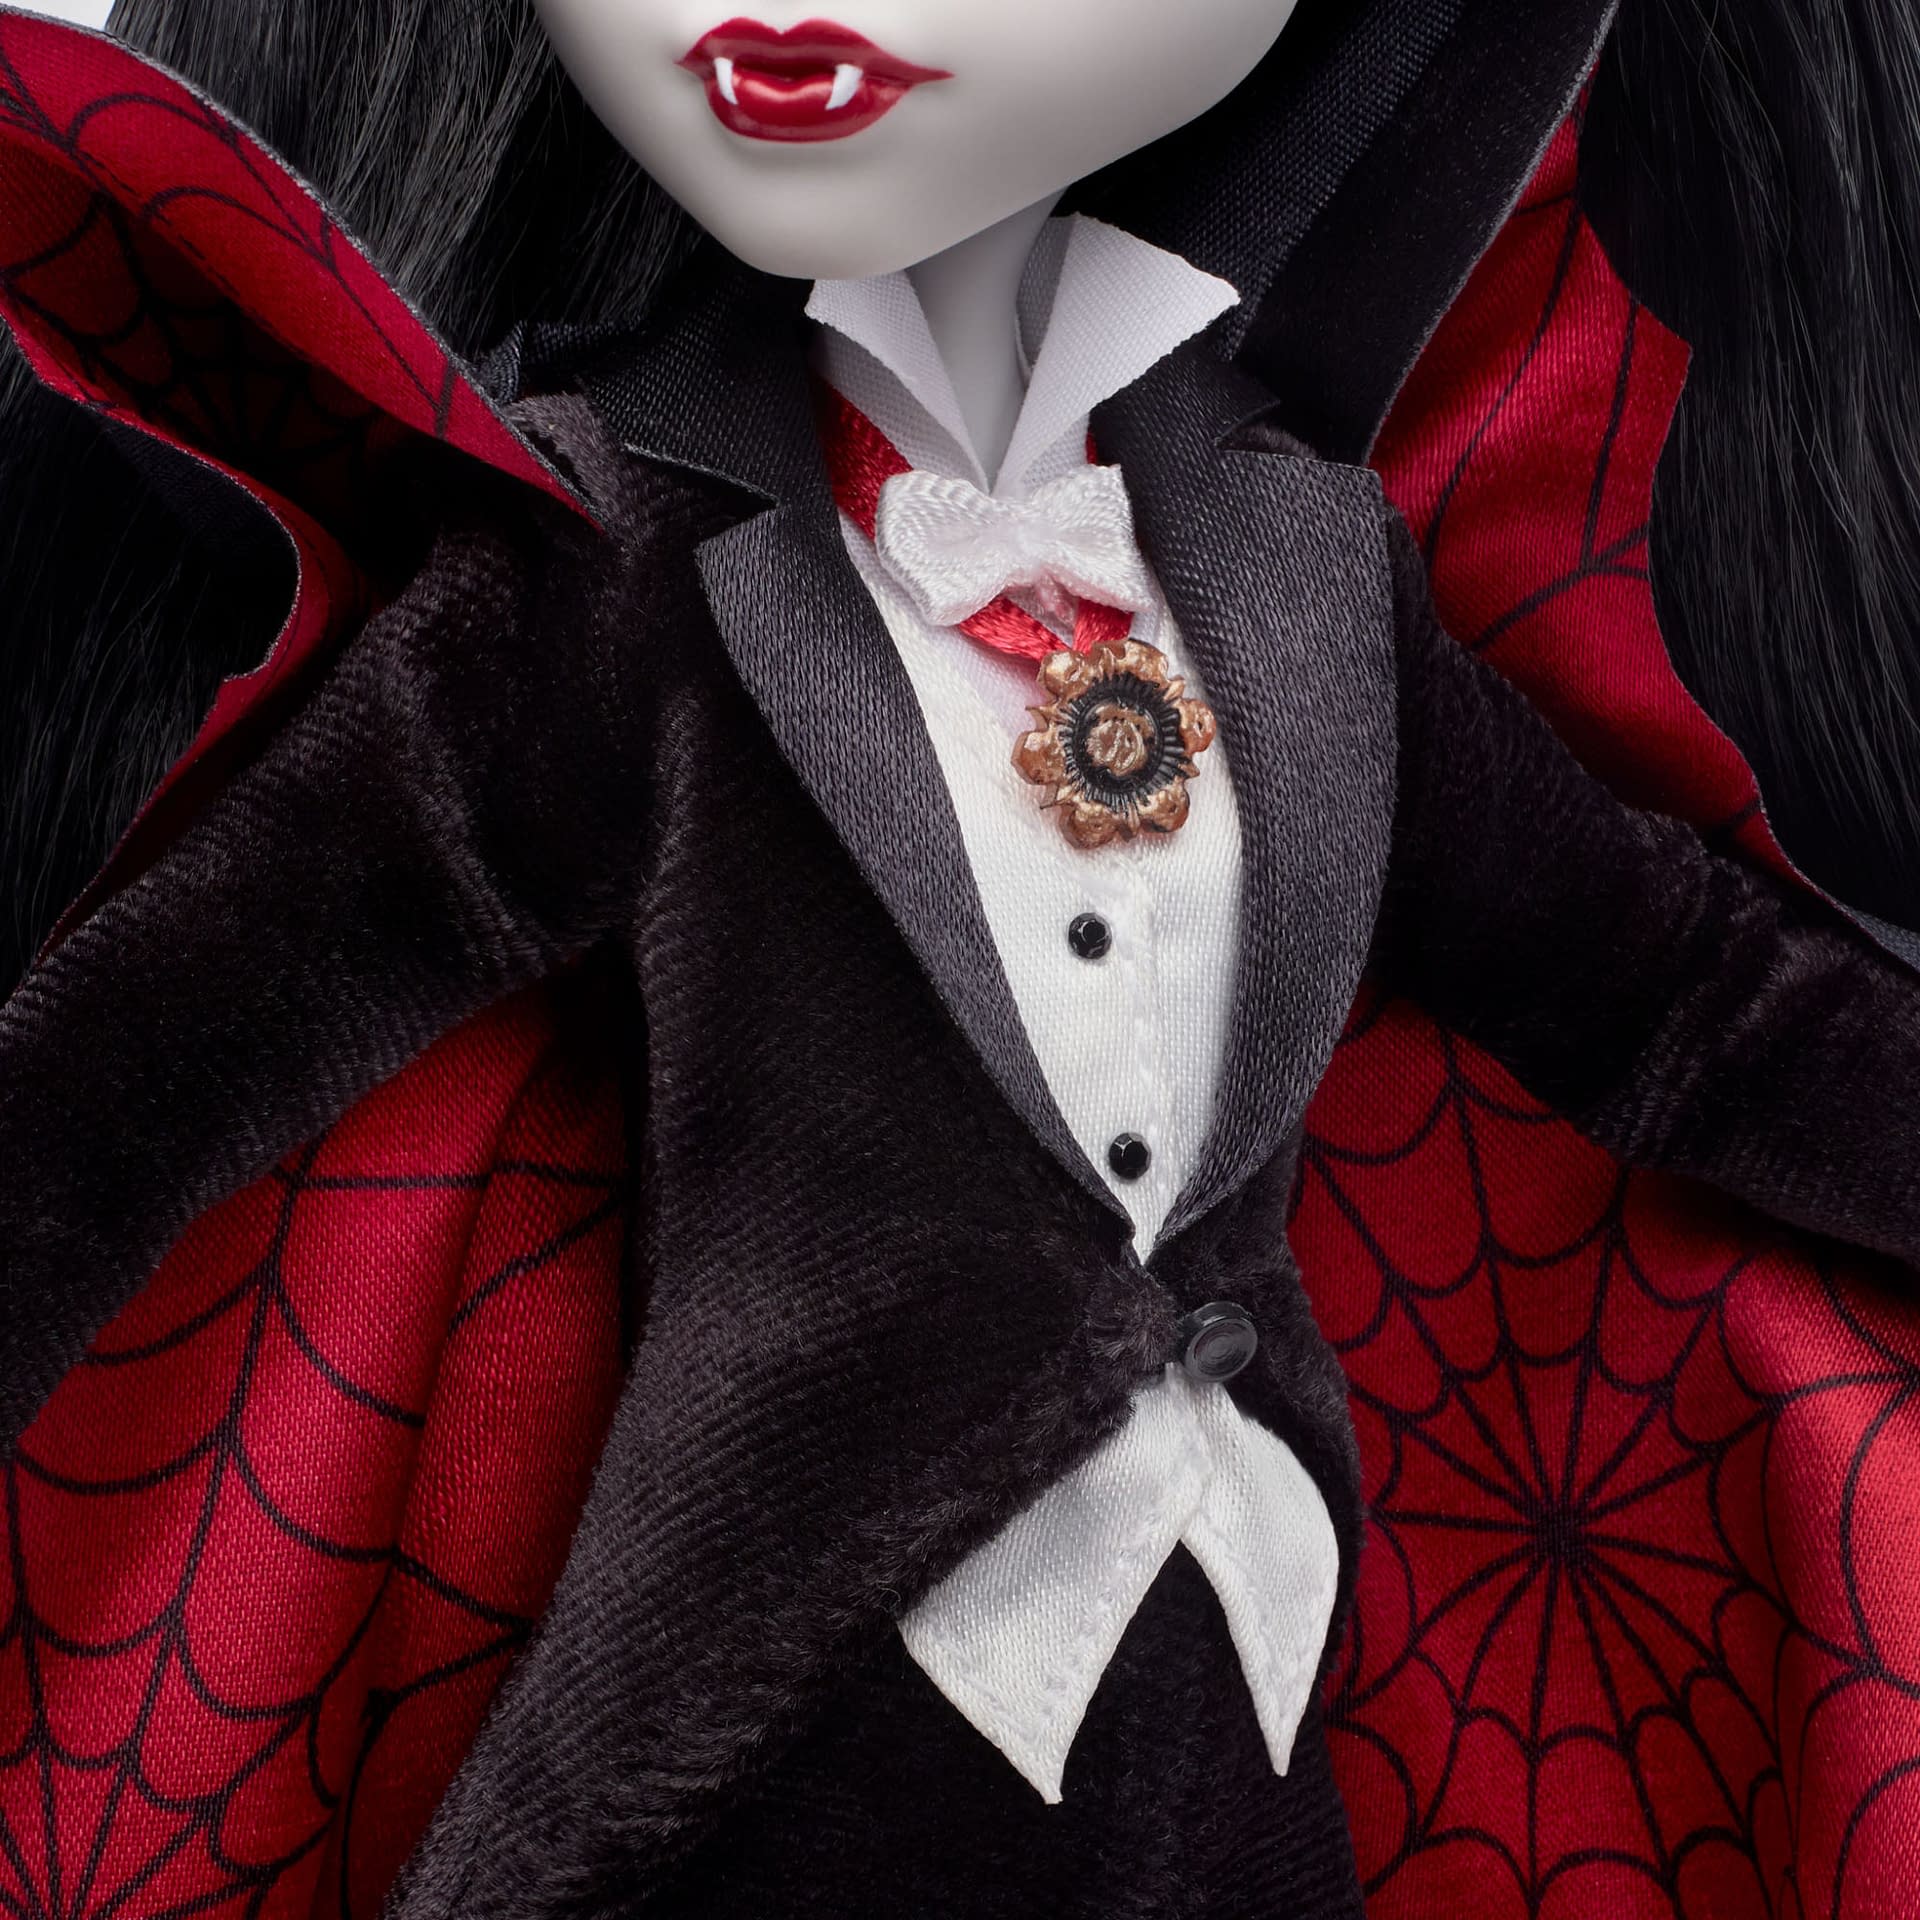 Monster High Dracula Tribute Doll On Mattel Creations June 3rd